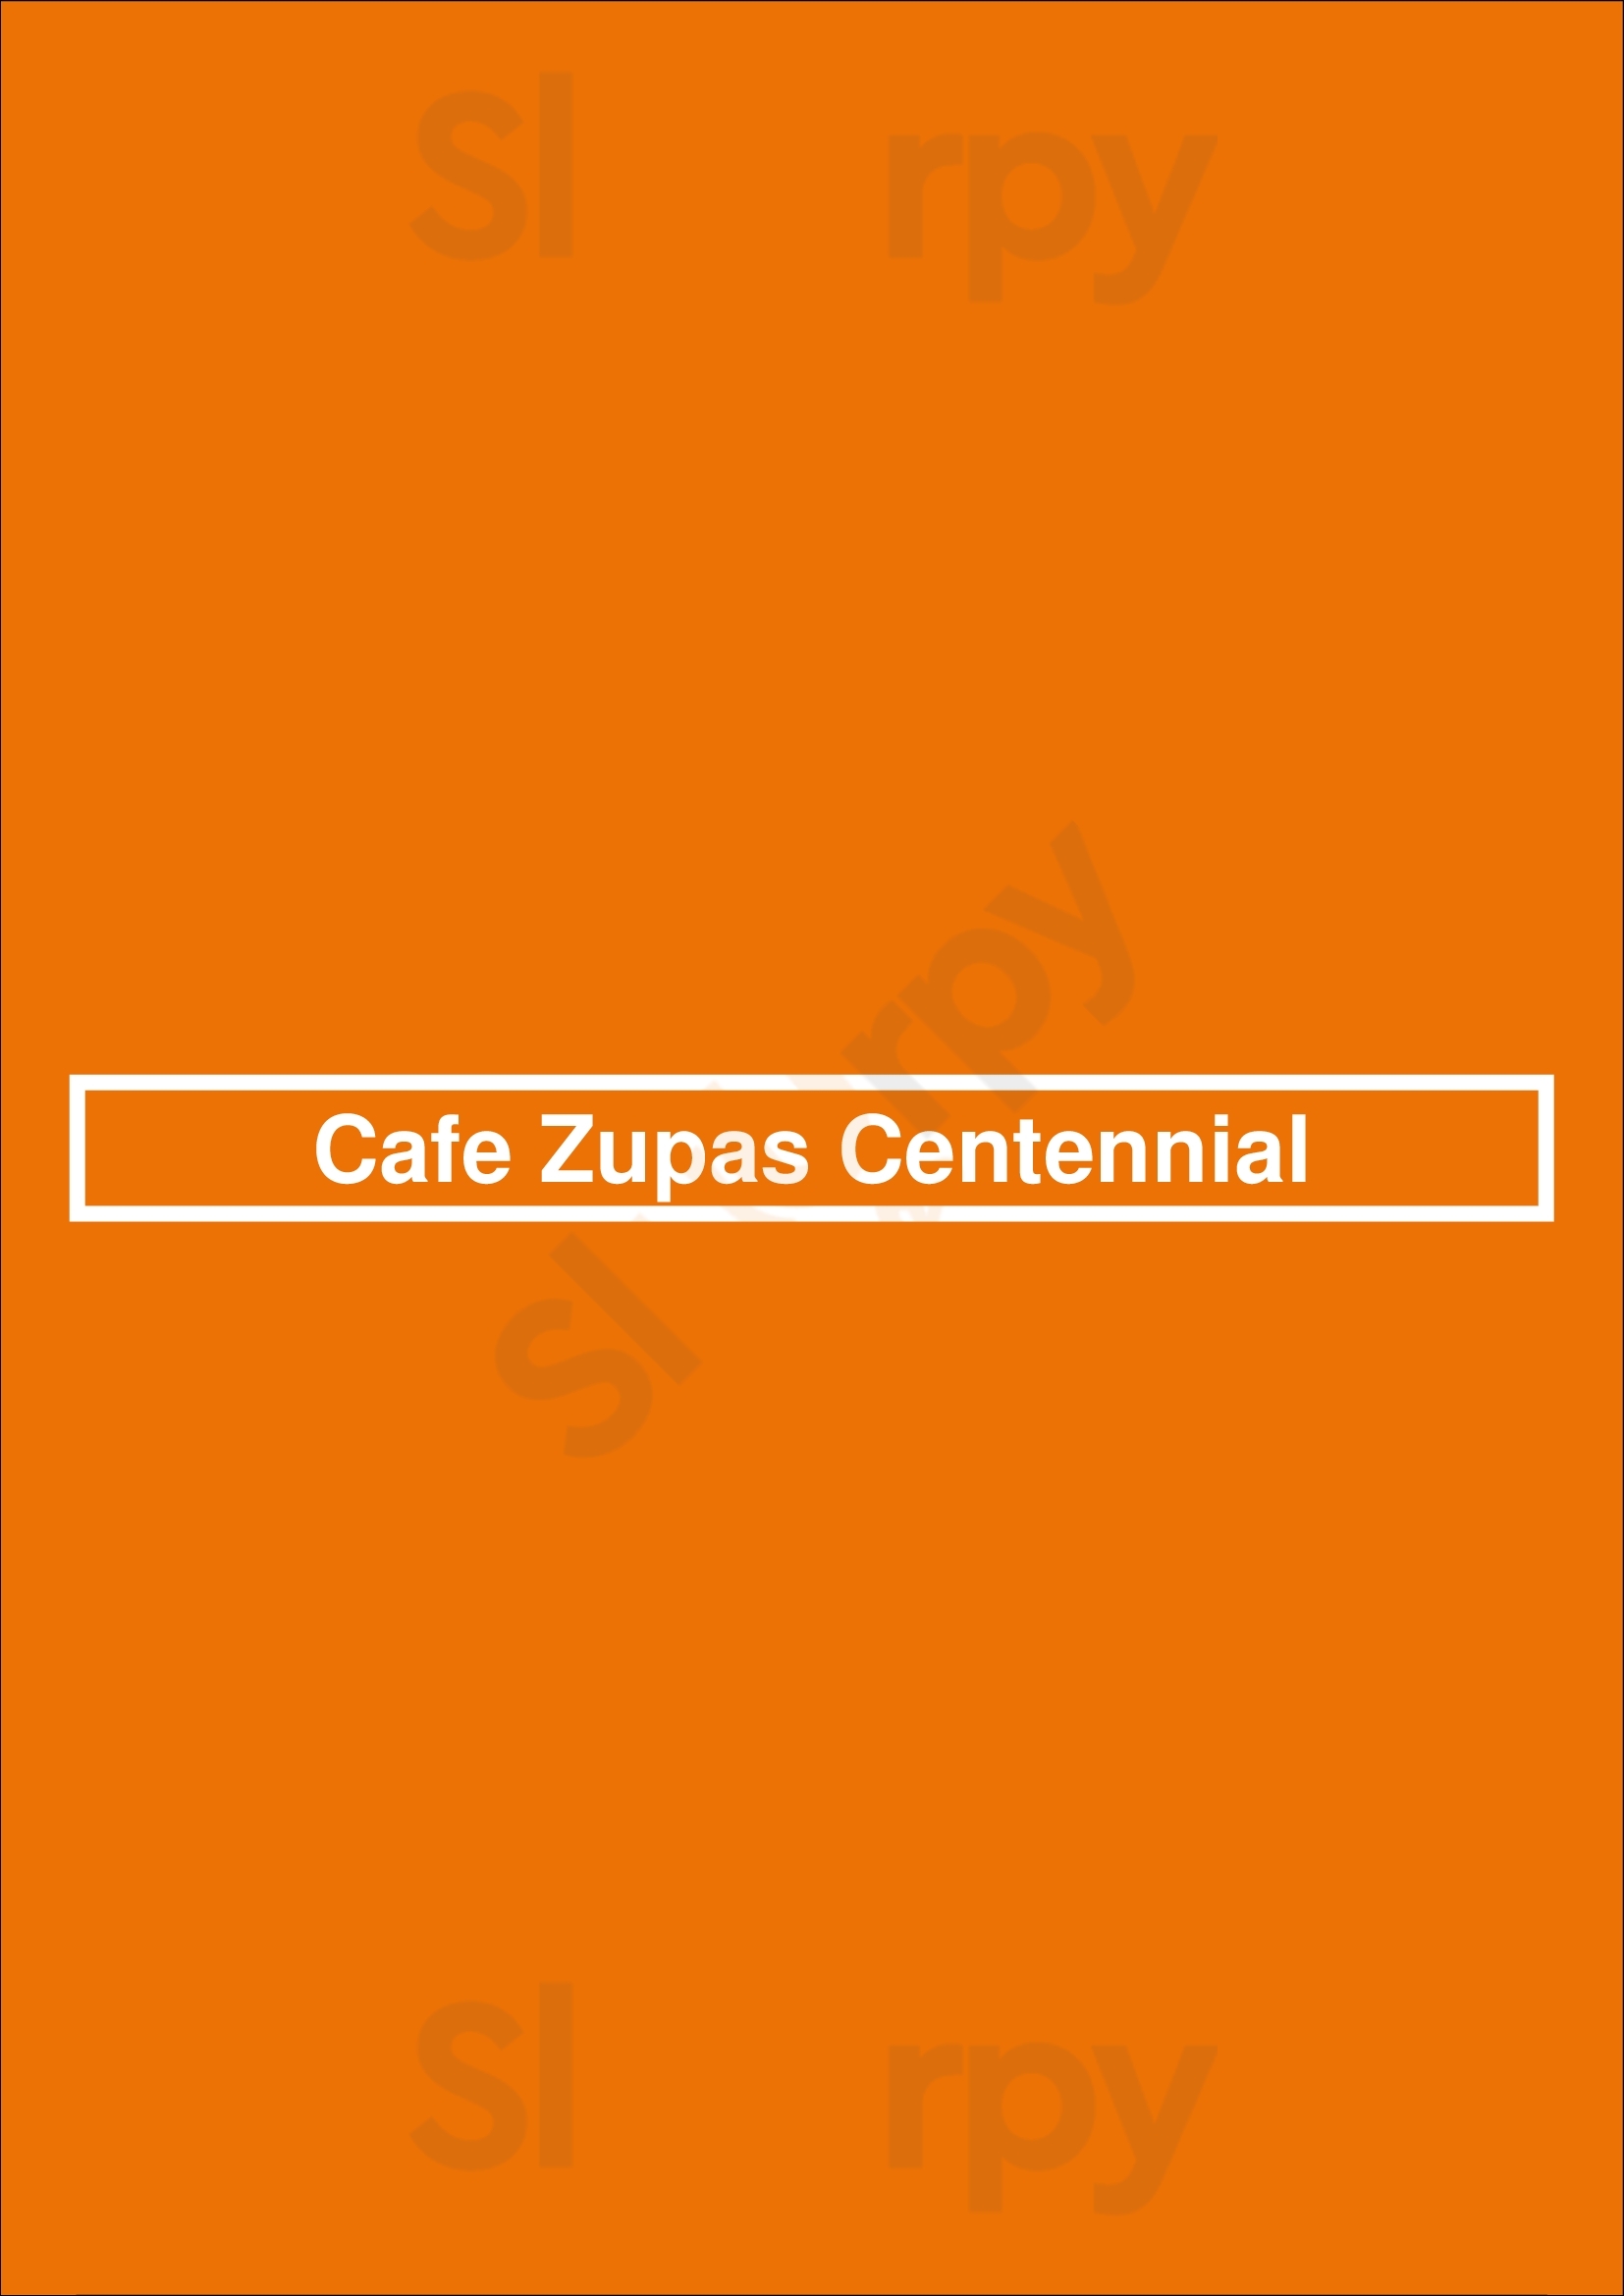 Cafe Zupas Centennial Las Vegas Menu - 1